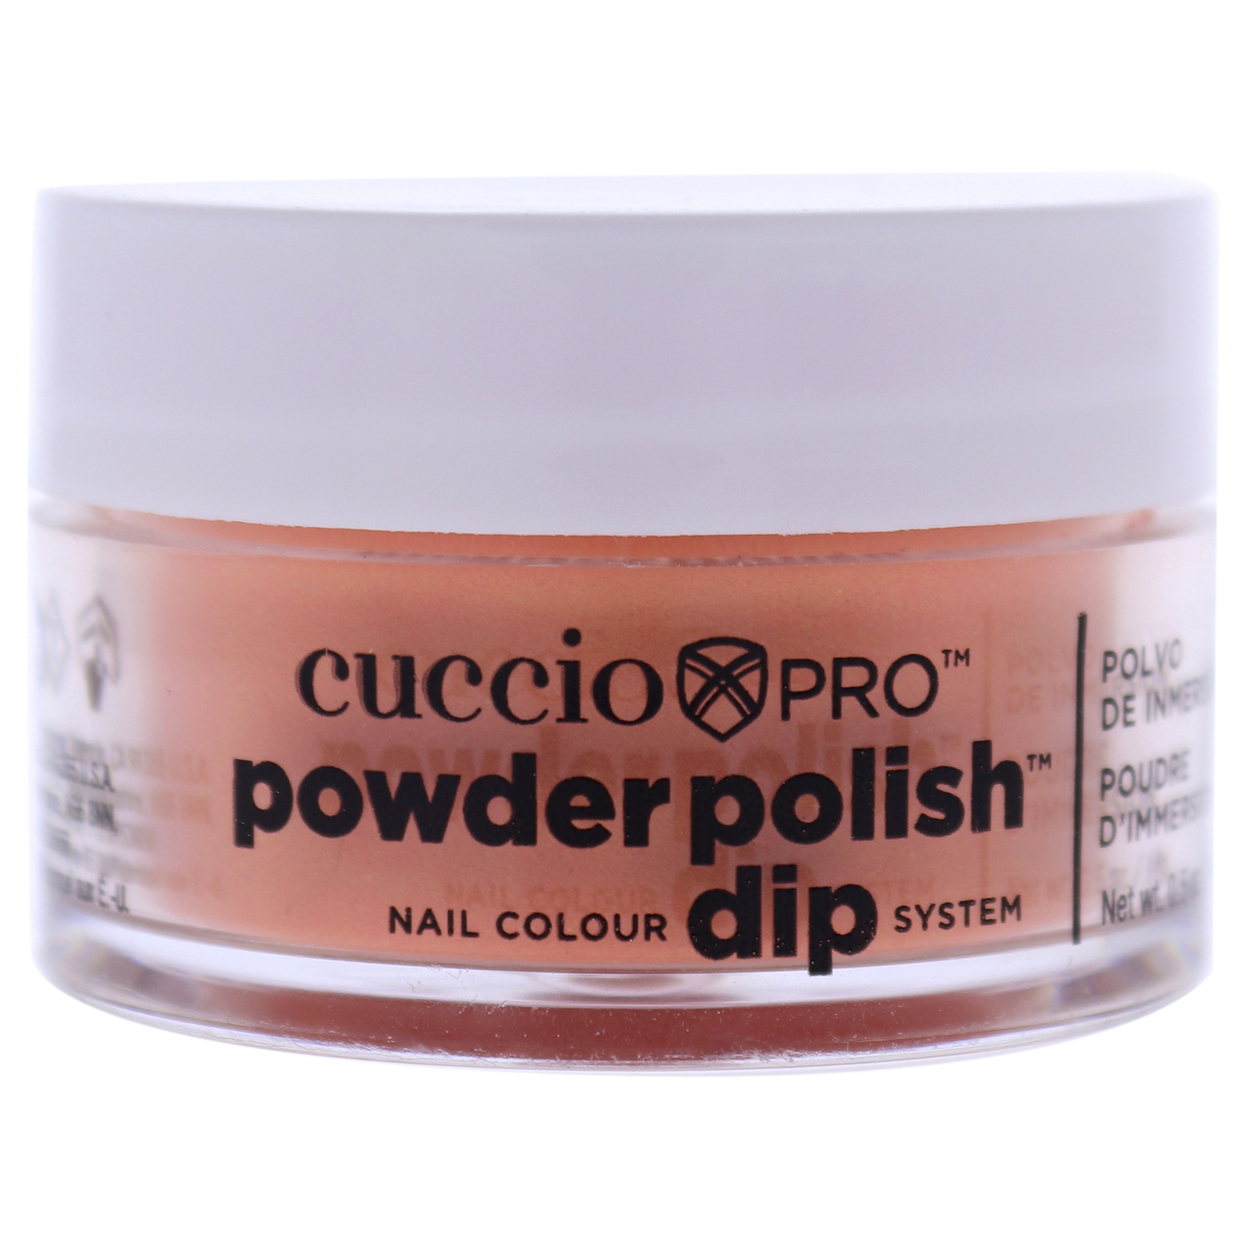 Cuccio Colour Pro Powder Polish Nail Colour Dip System - Tangerine Orange Nail Powder 0.5 Oz